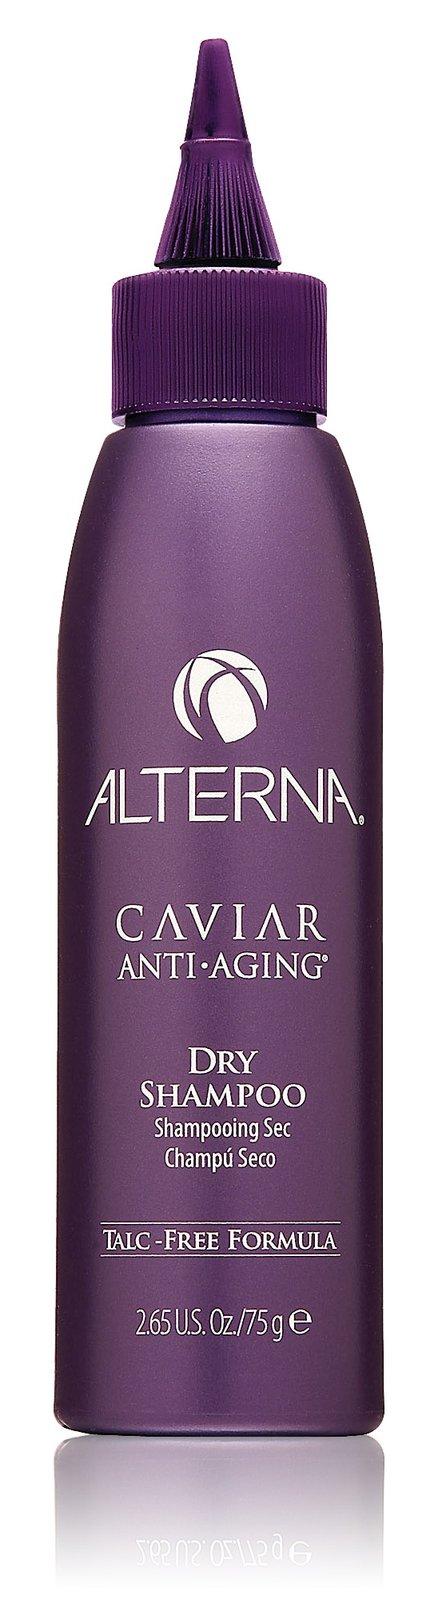 Alterna Caviar Dry Shampoo